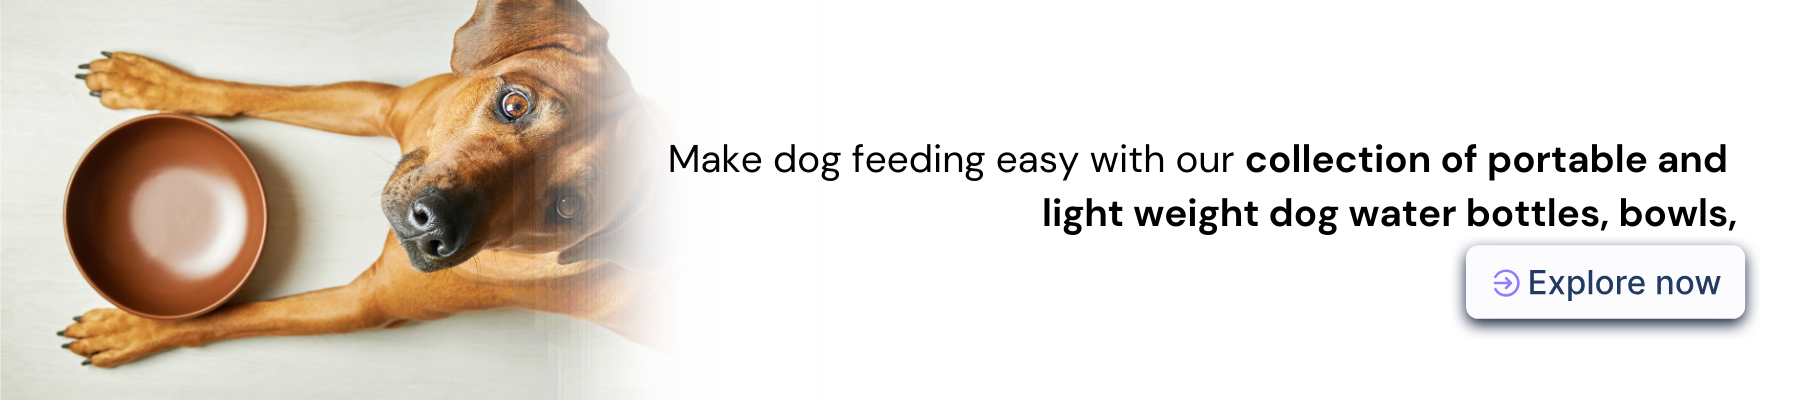 buy dog feeding products online in Australia